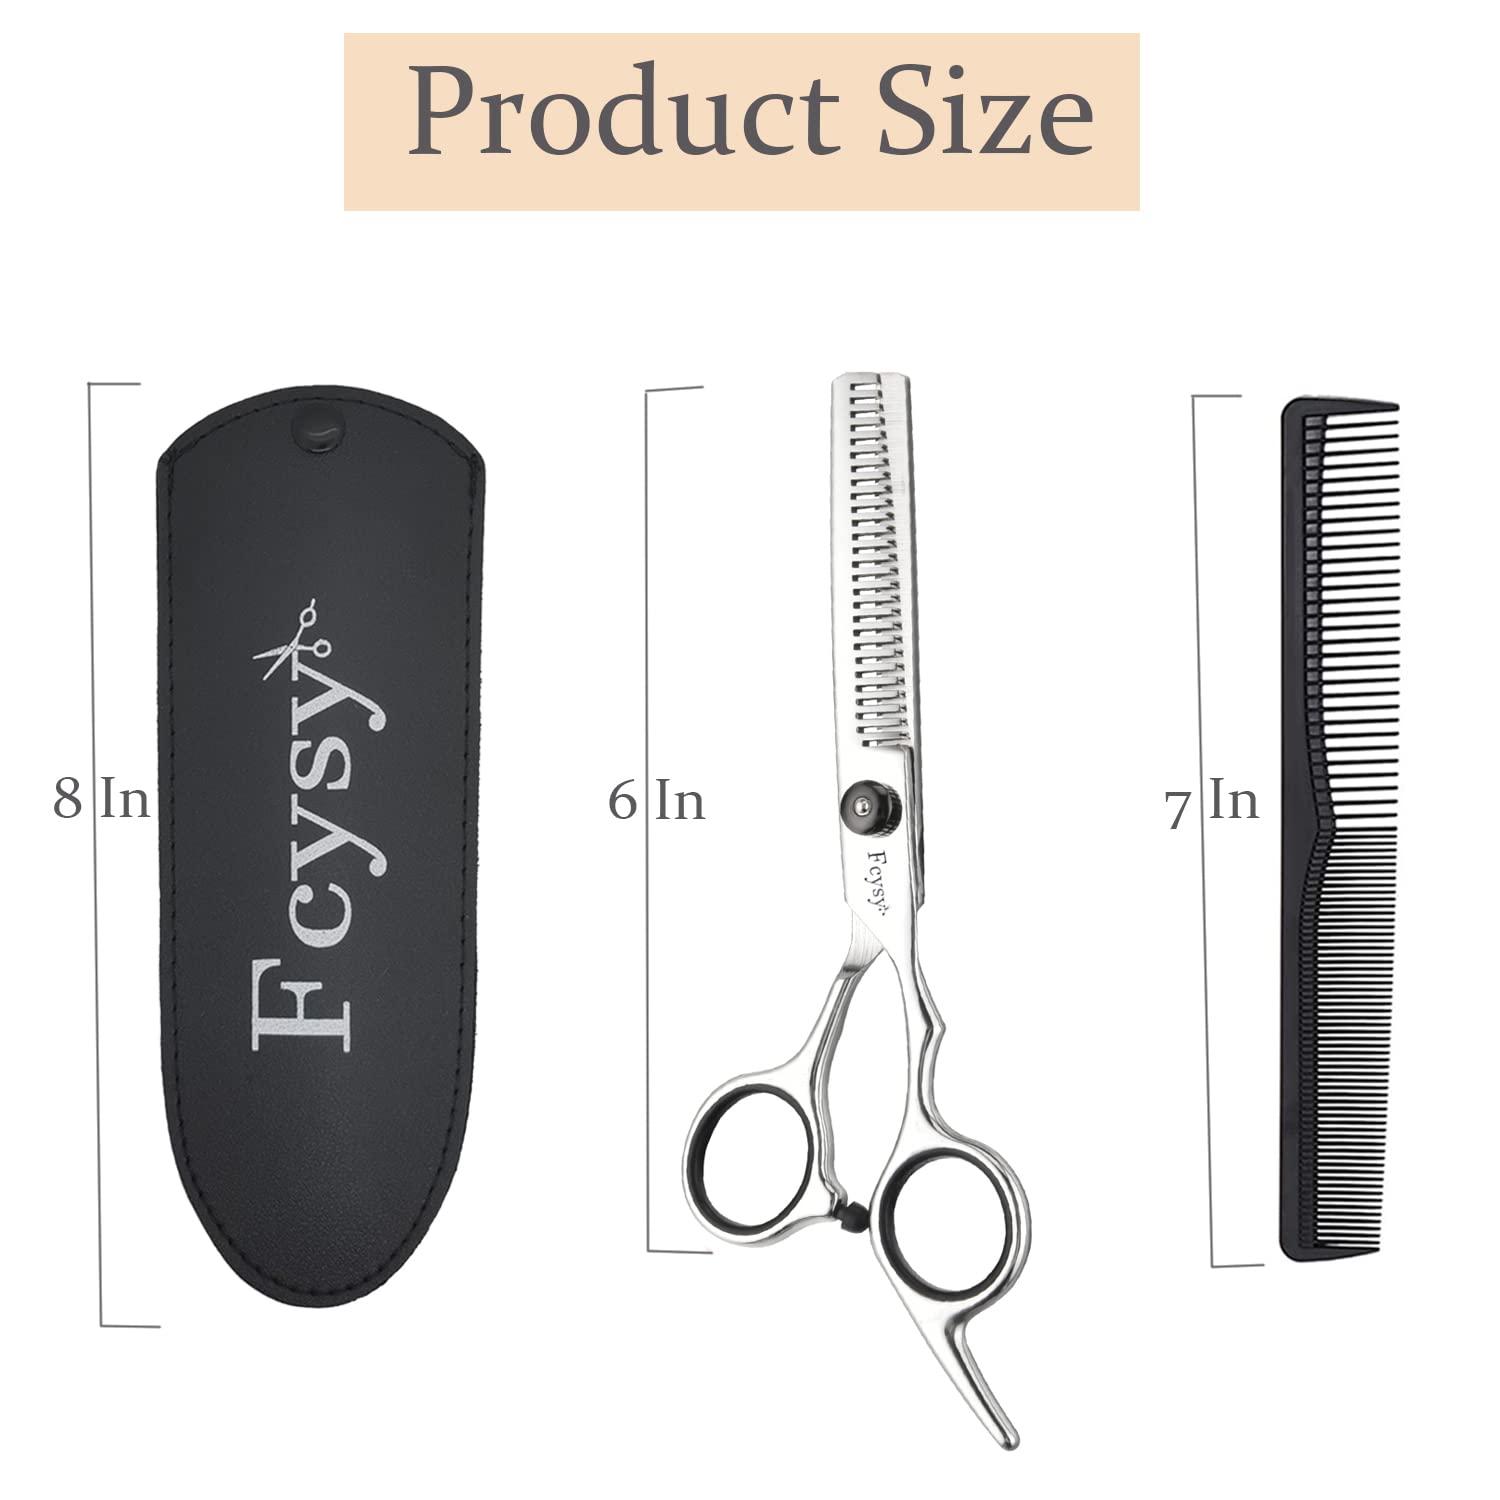 8 Pcs Hair Cutting Scissors Kit,Black Blue Professional Home Hair Cutting Barber/Salon Thinning Shears,Hair Cutting Shears Hair Cut Blending Salon